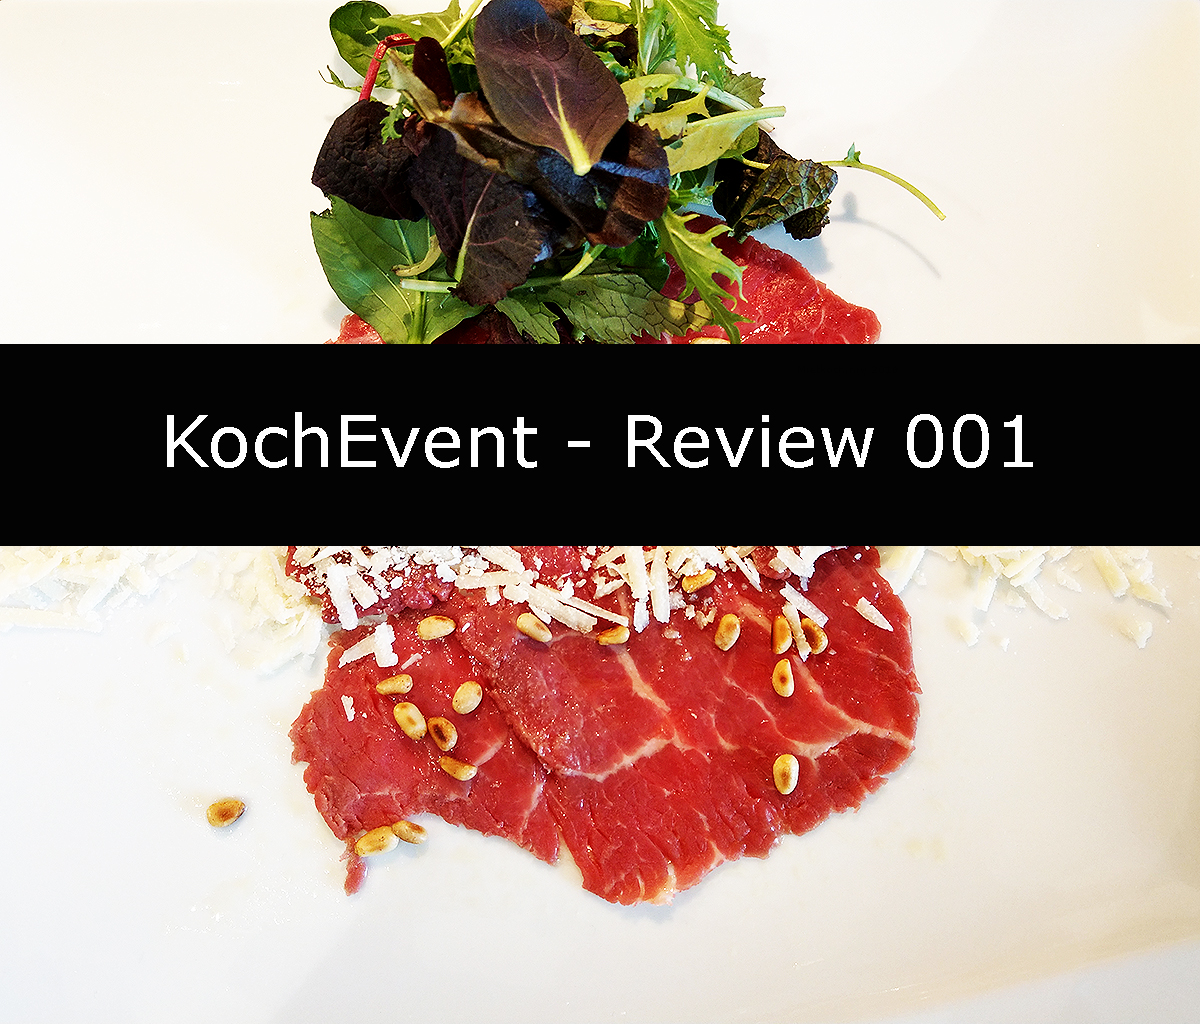 Titel KochEvent - Review 001 mit Carpaccio als Hintergrundbild